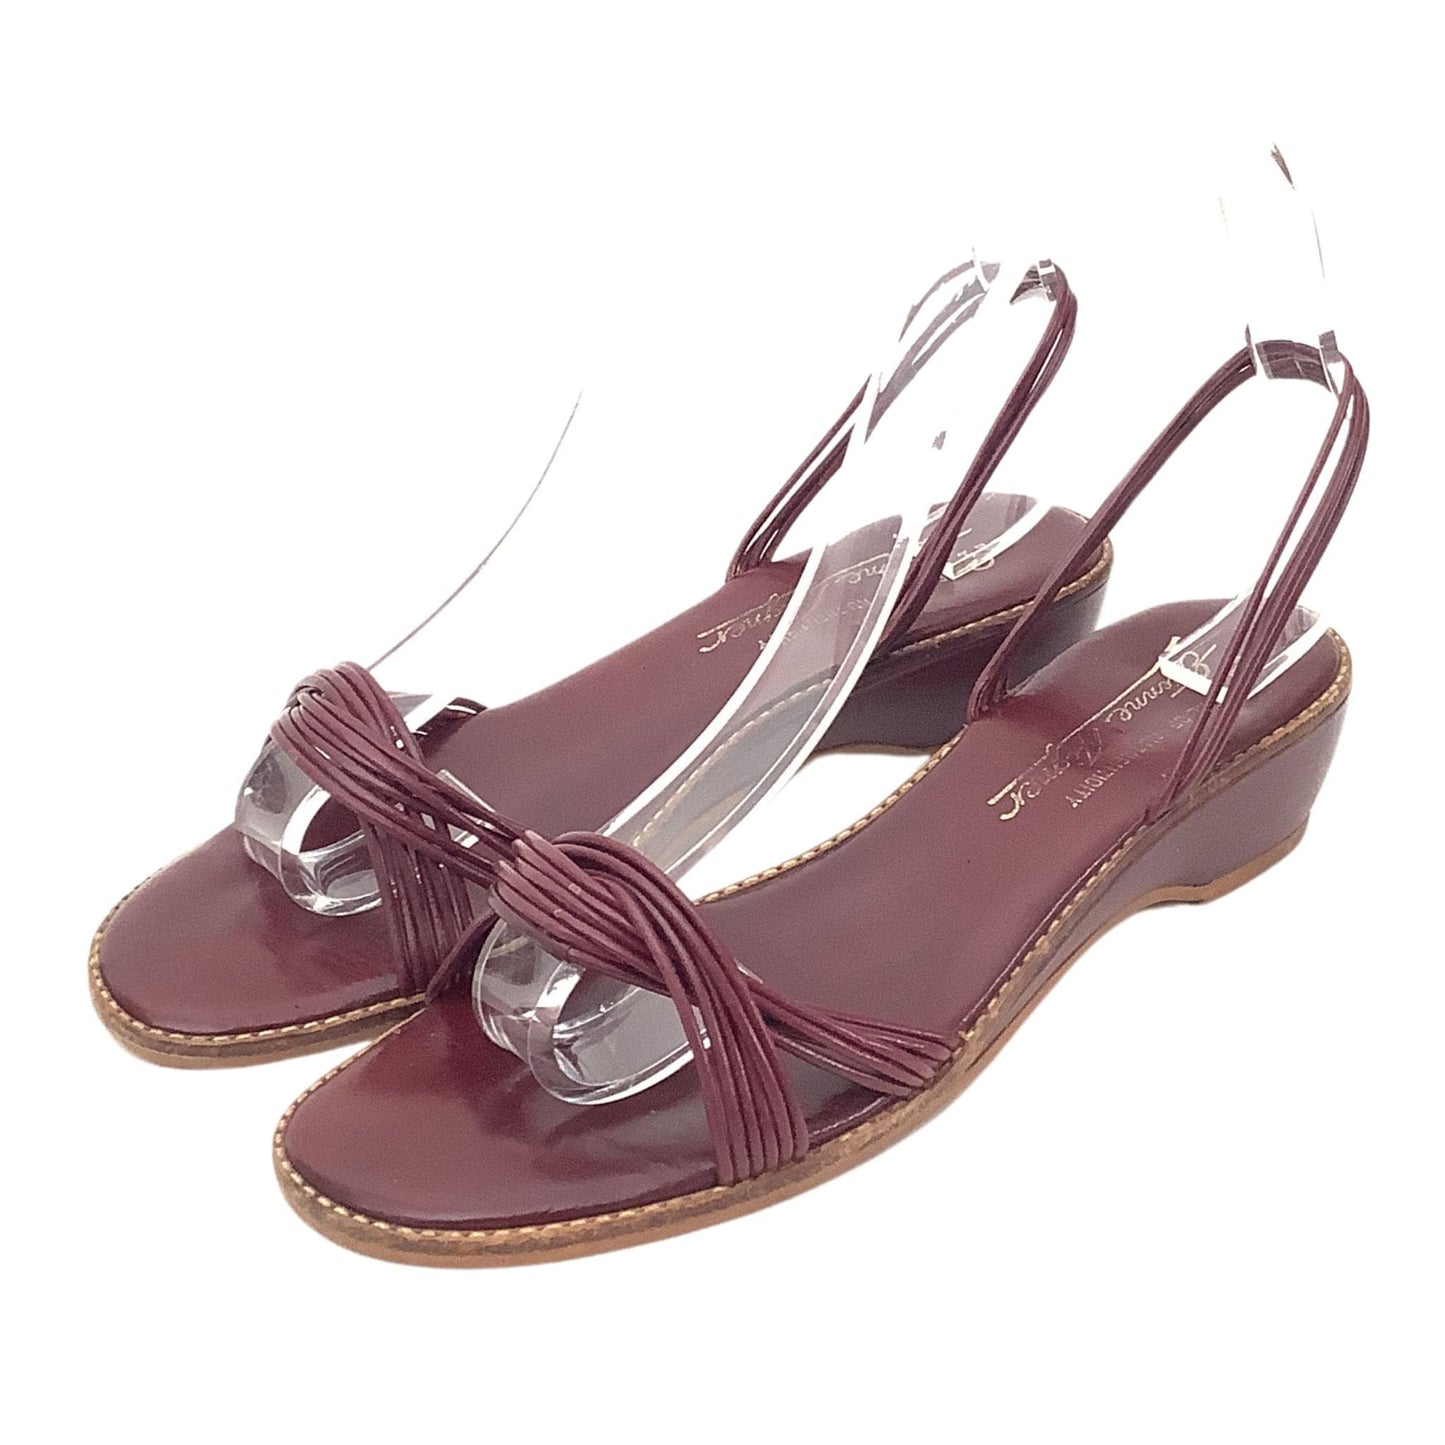 Aigner Strappy Flat Sandals 7 / Burgundy / Vintage - 1980s